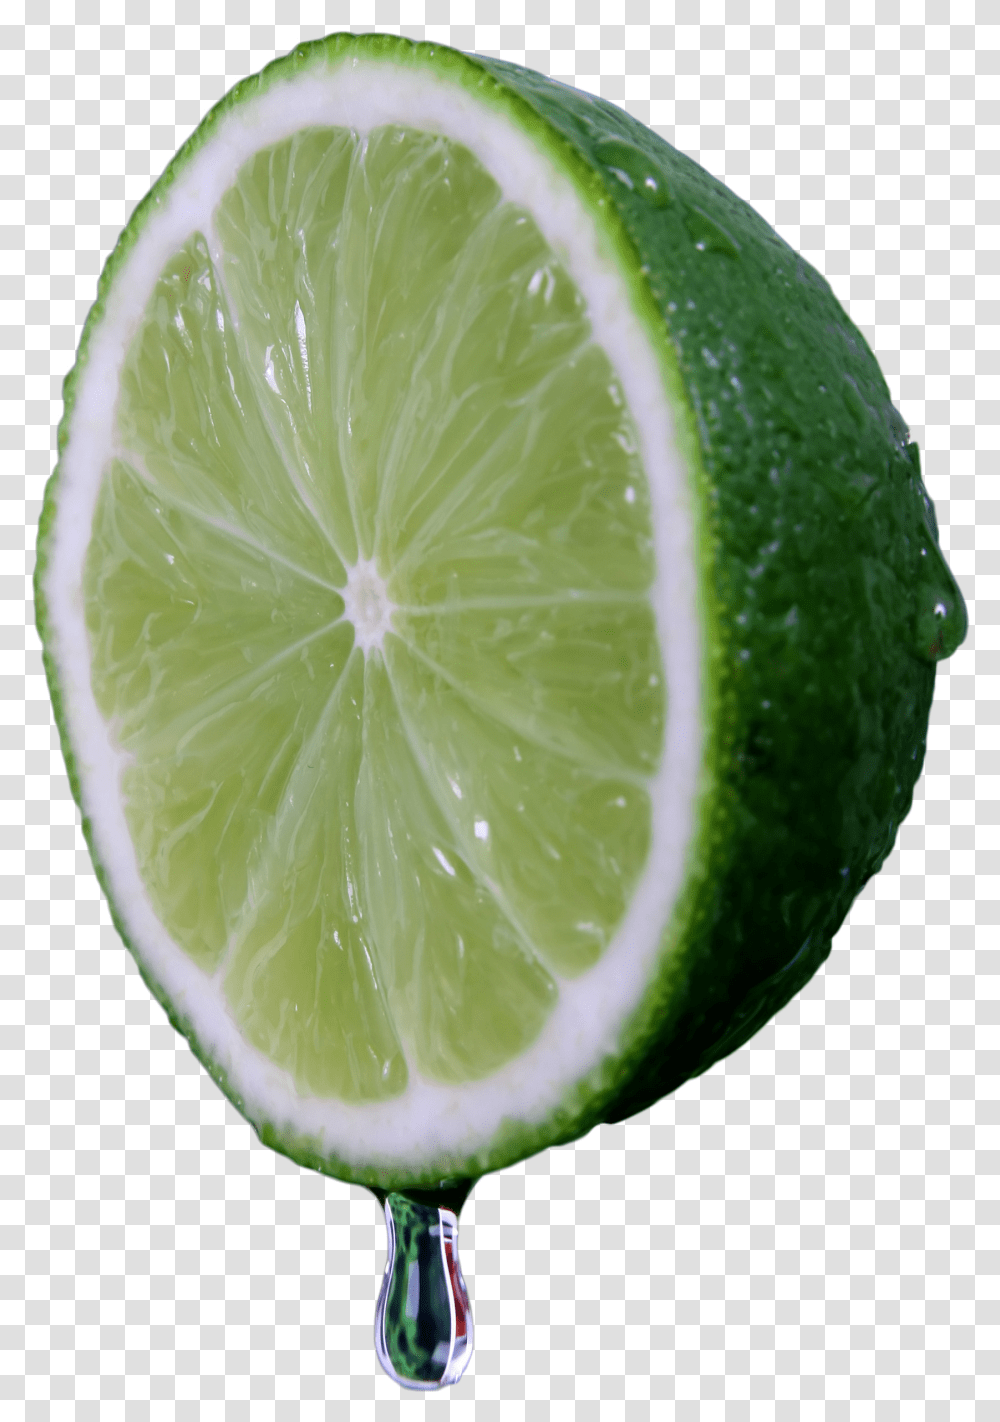 Download Lime Halved Image For Free Water Droplet, Citrus Fruit, Plant, Food, Pineapple Transparent Png